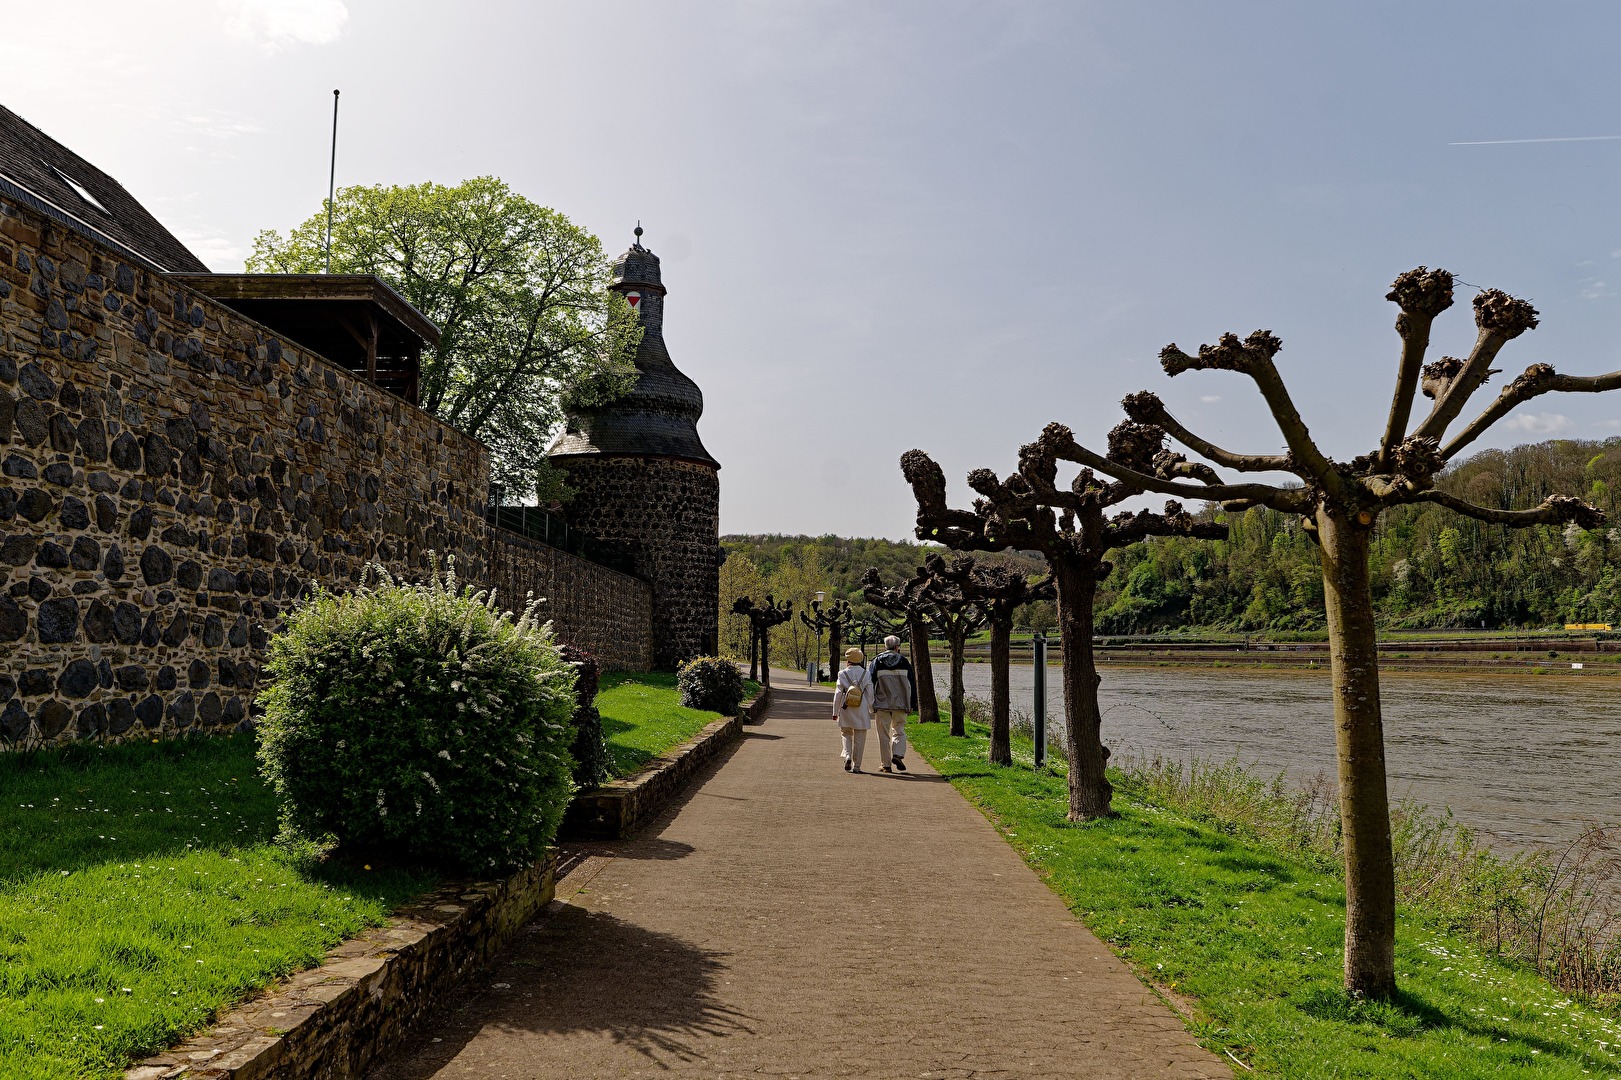 Sonntagsspaziergang am Rhein